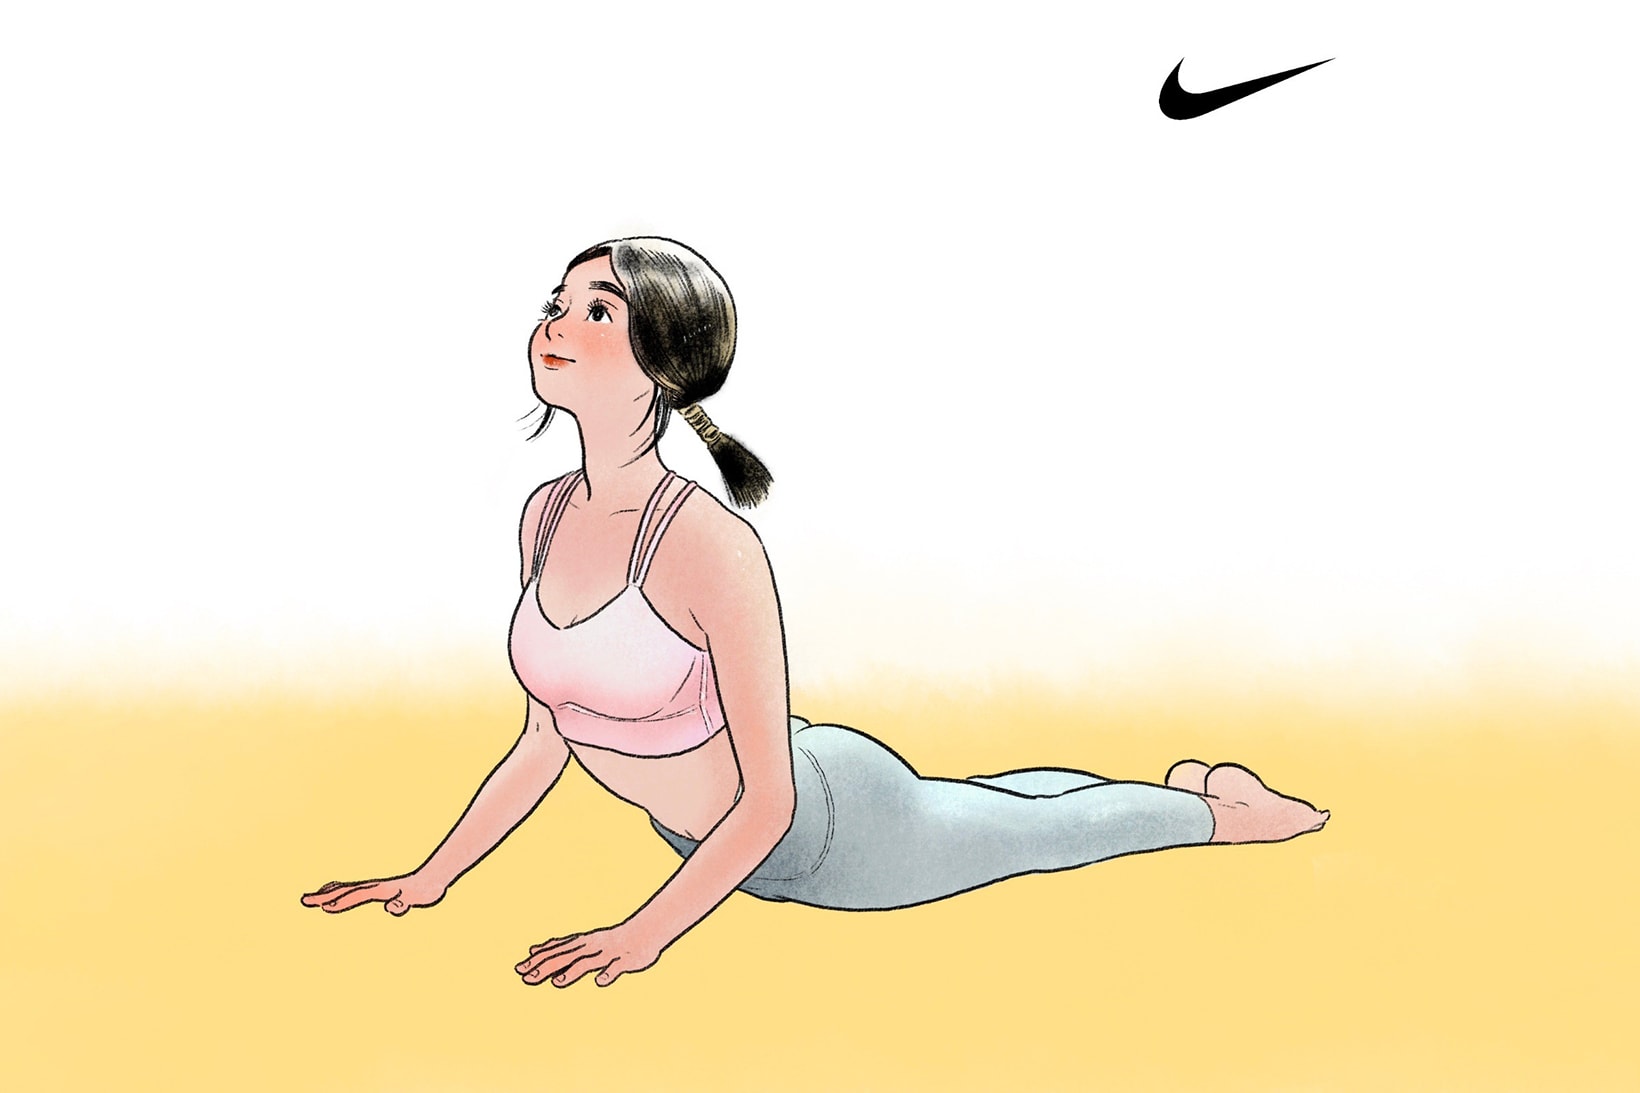 Strike a pose like Nike Yoga Instructor @samm_yv or take a rest